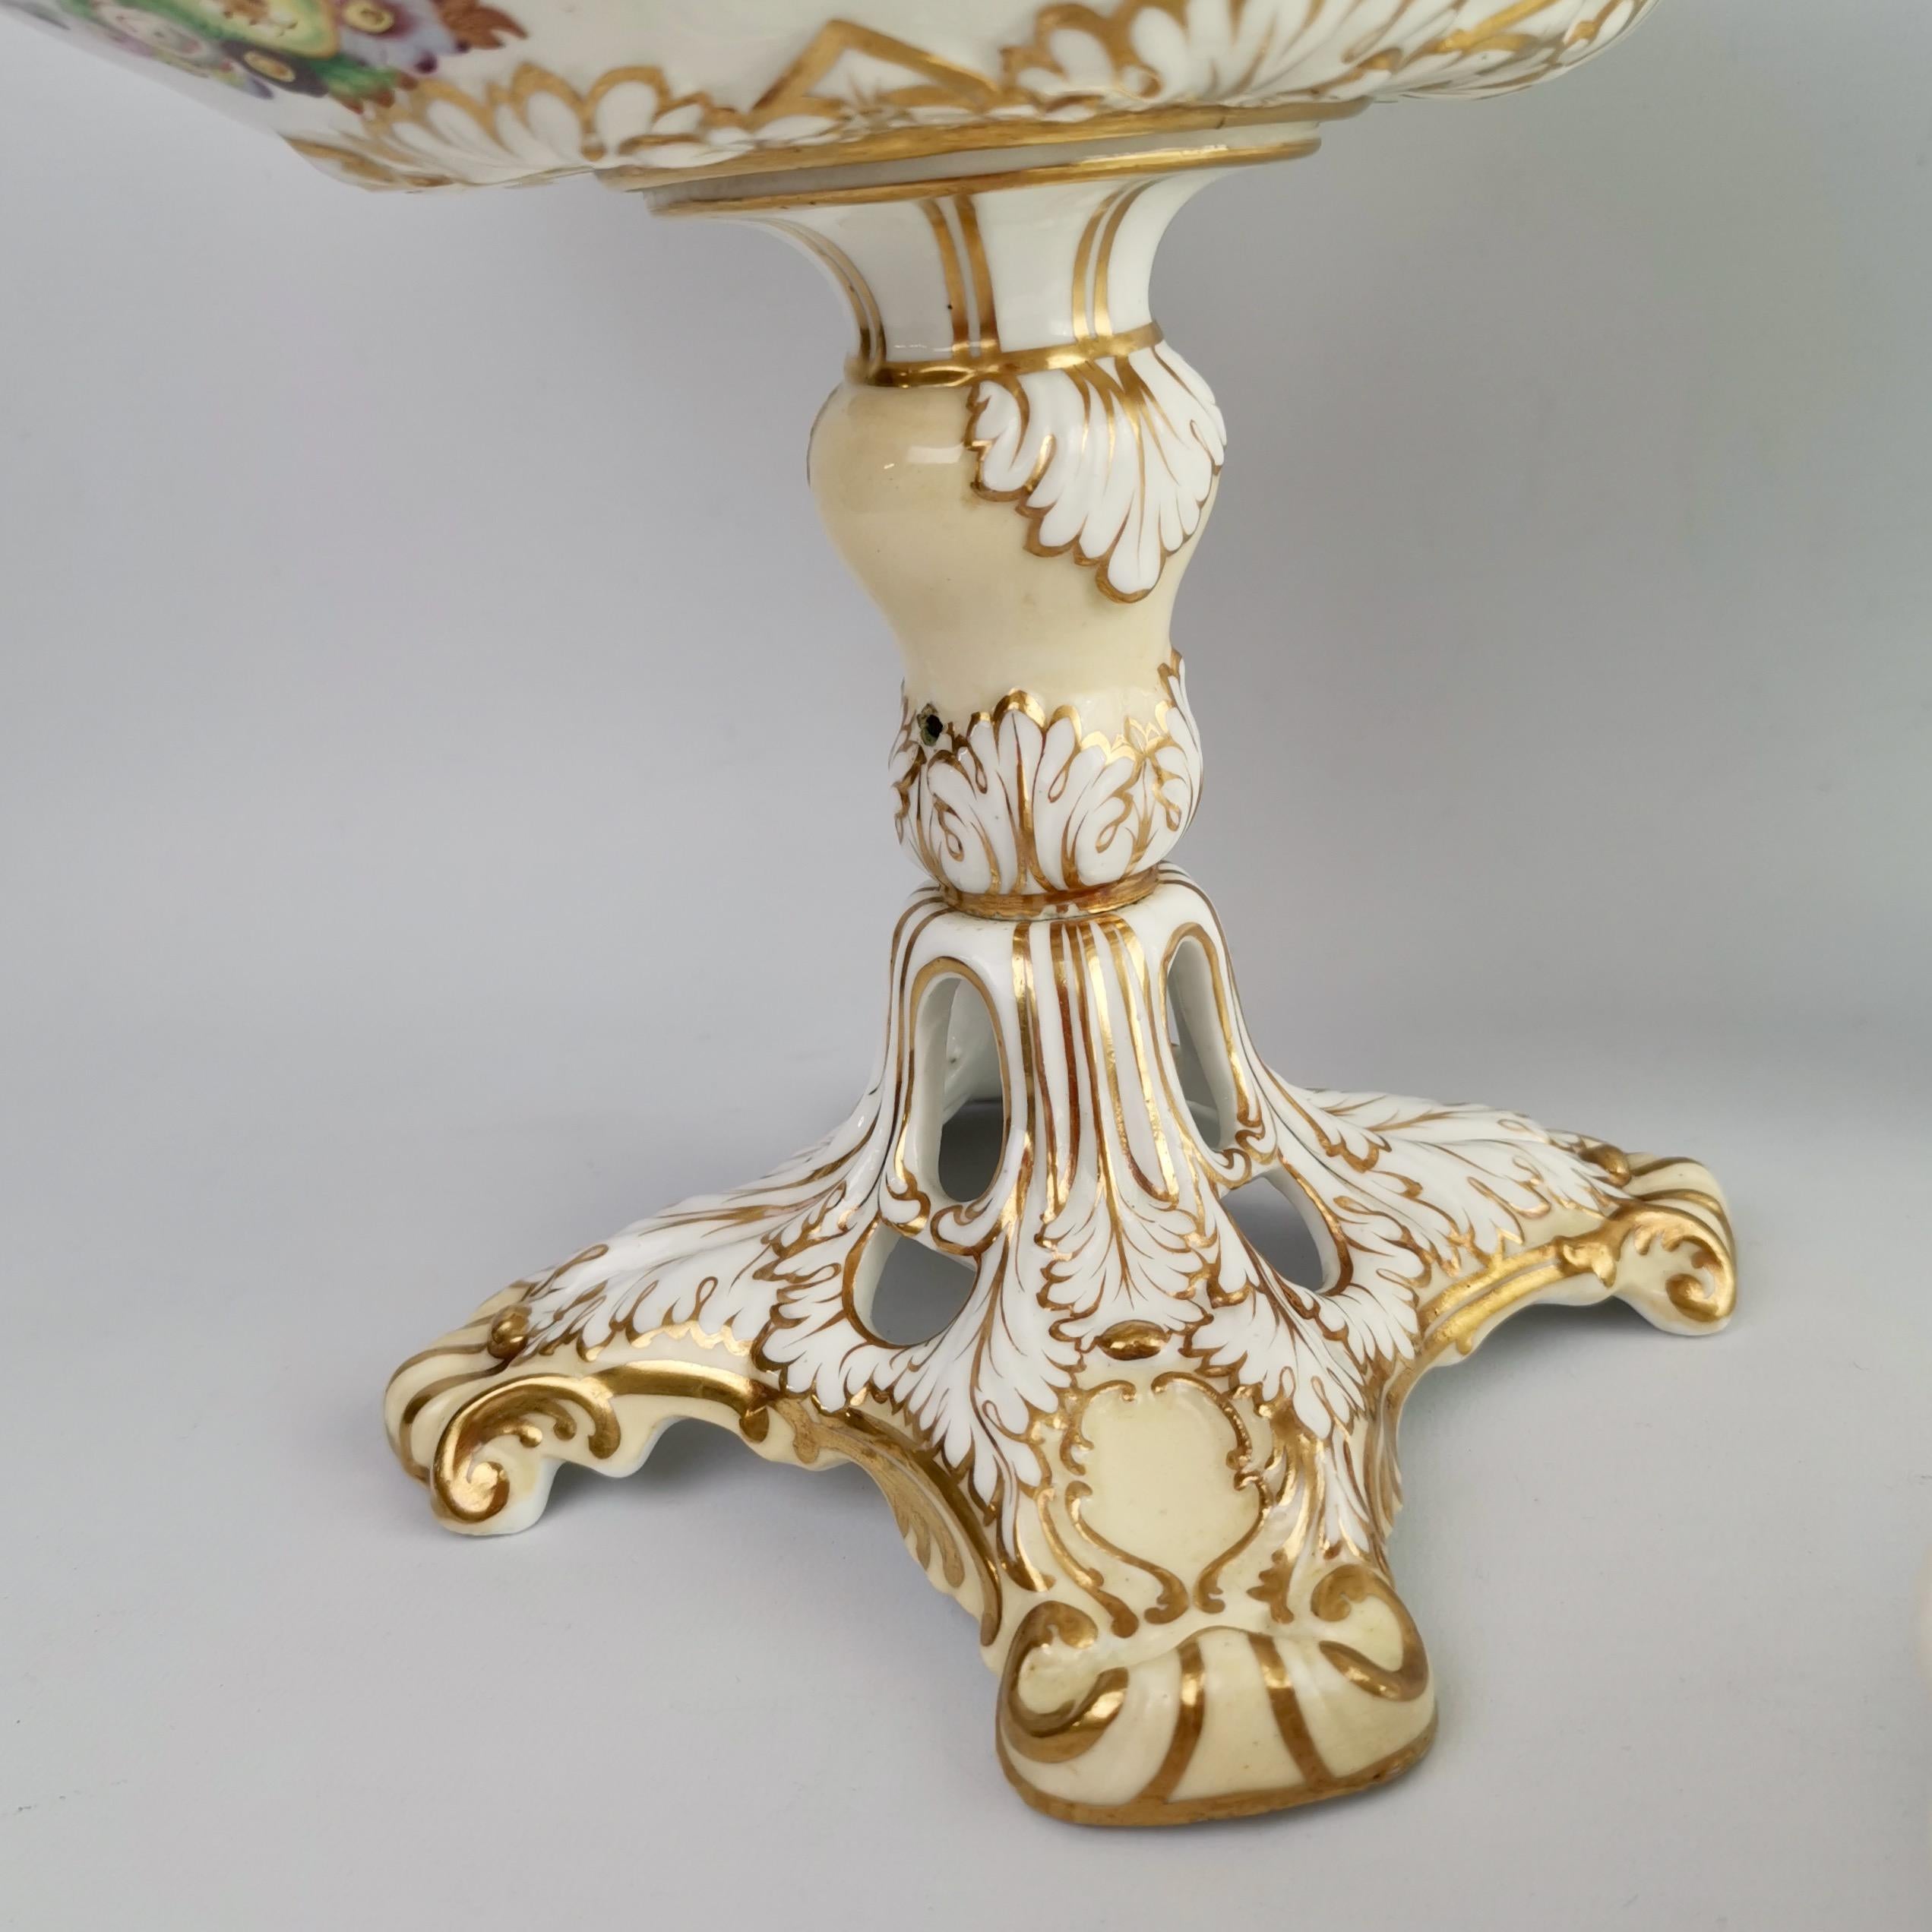 Rococo Revival Copeland & Garrett Porcelain Dessert Serving Set, Yellow with Flowers, 1833-1847